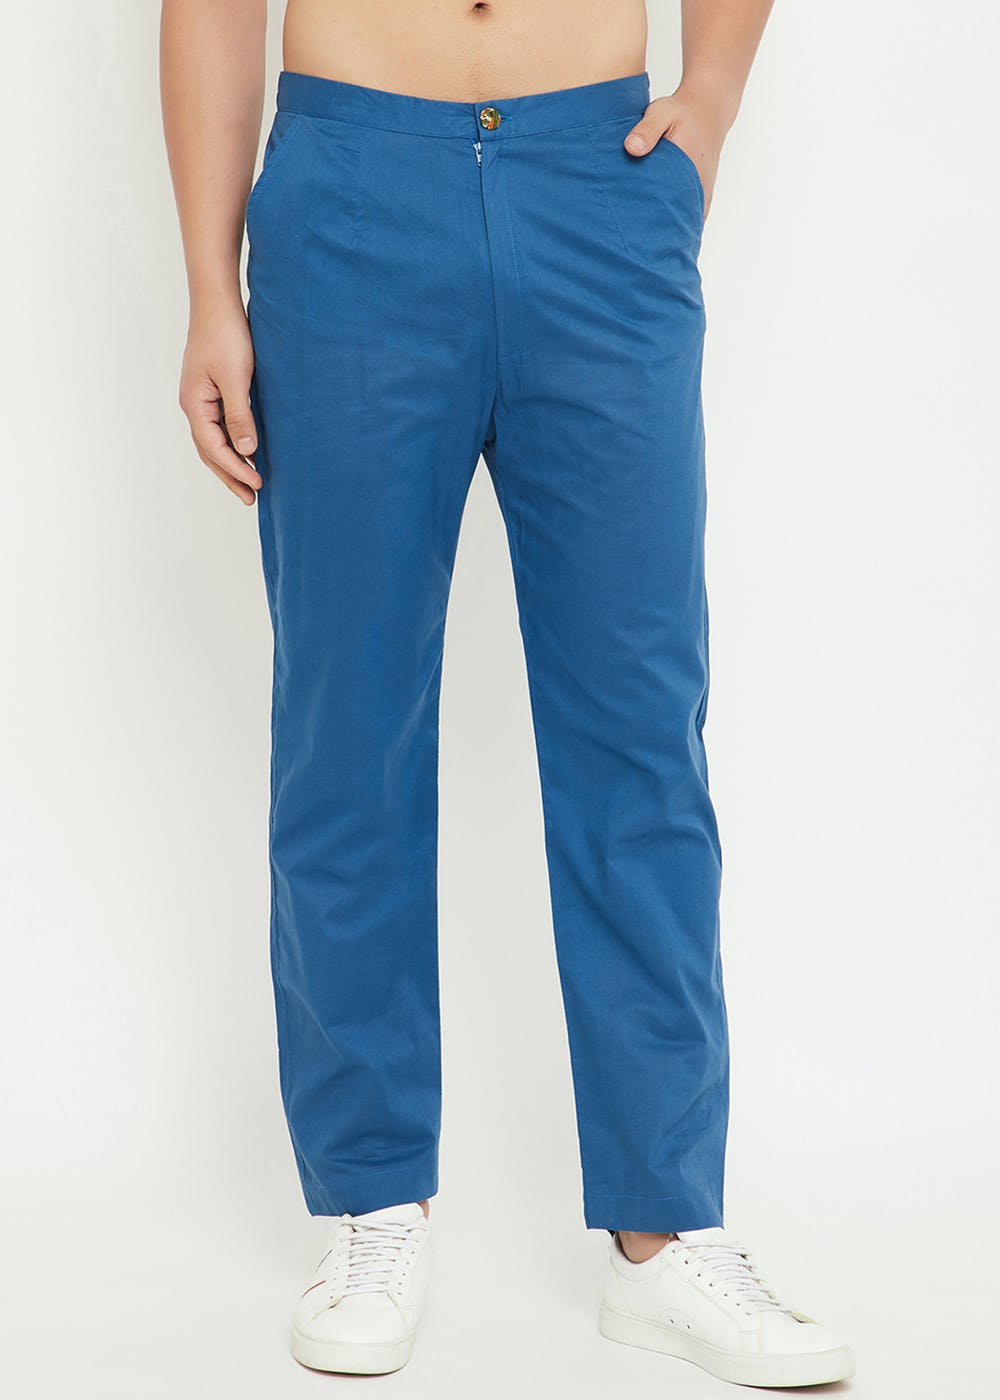 Jack  Jones Casual Trousers  Buy Jack  Jones Royal Blue Mid Rise Slim  Fit Trousers OnlineNykaa fashion